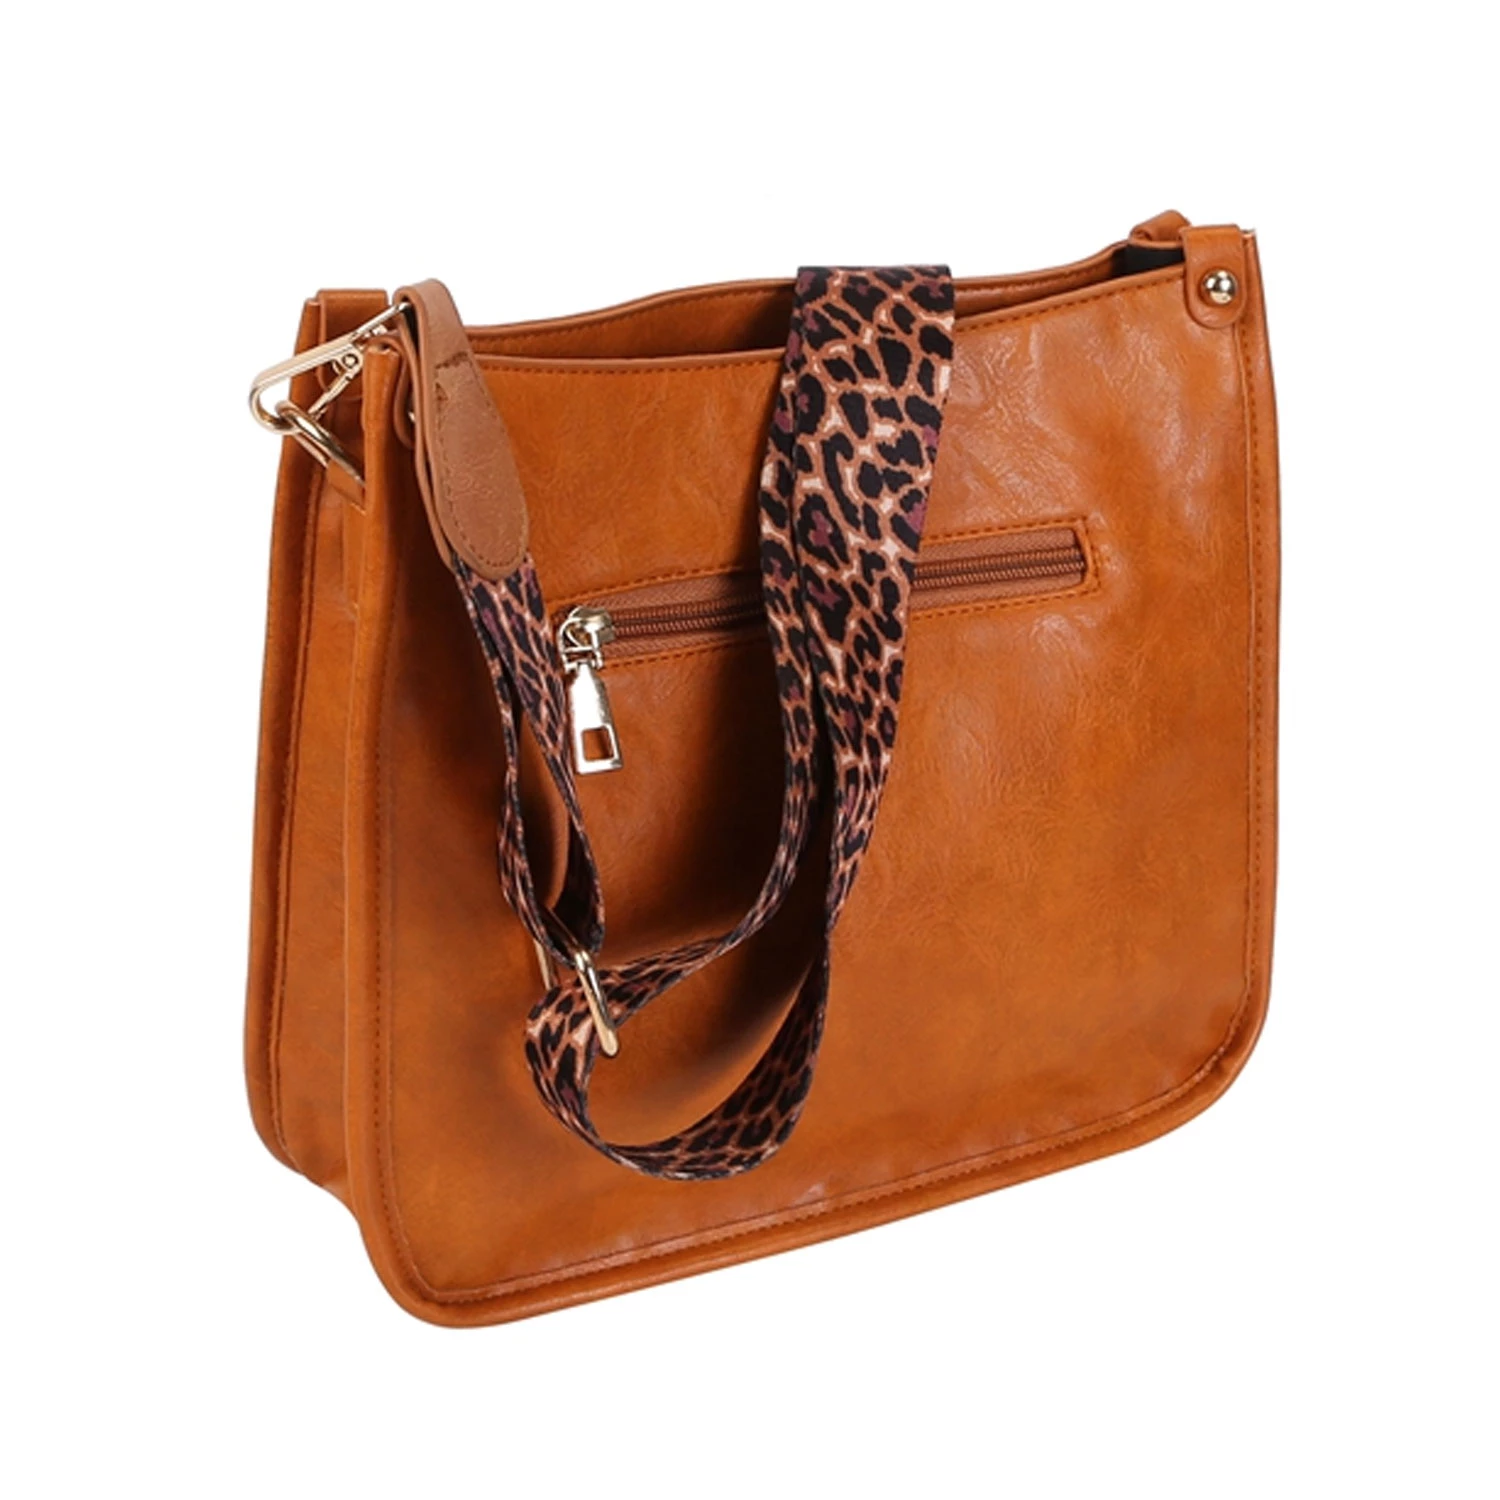 Women's Fashion Leather Crossbody Bag Shoulder Bag Casual Handbag With Flexible Wearing Styles